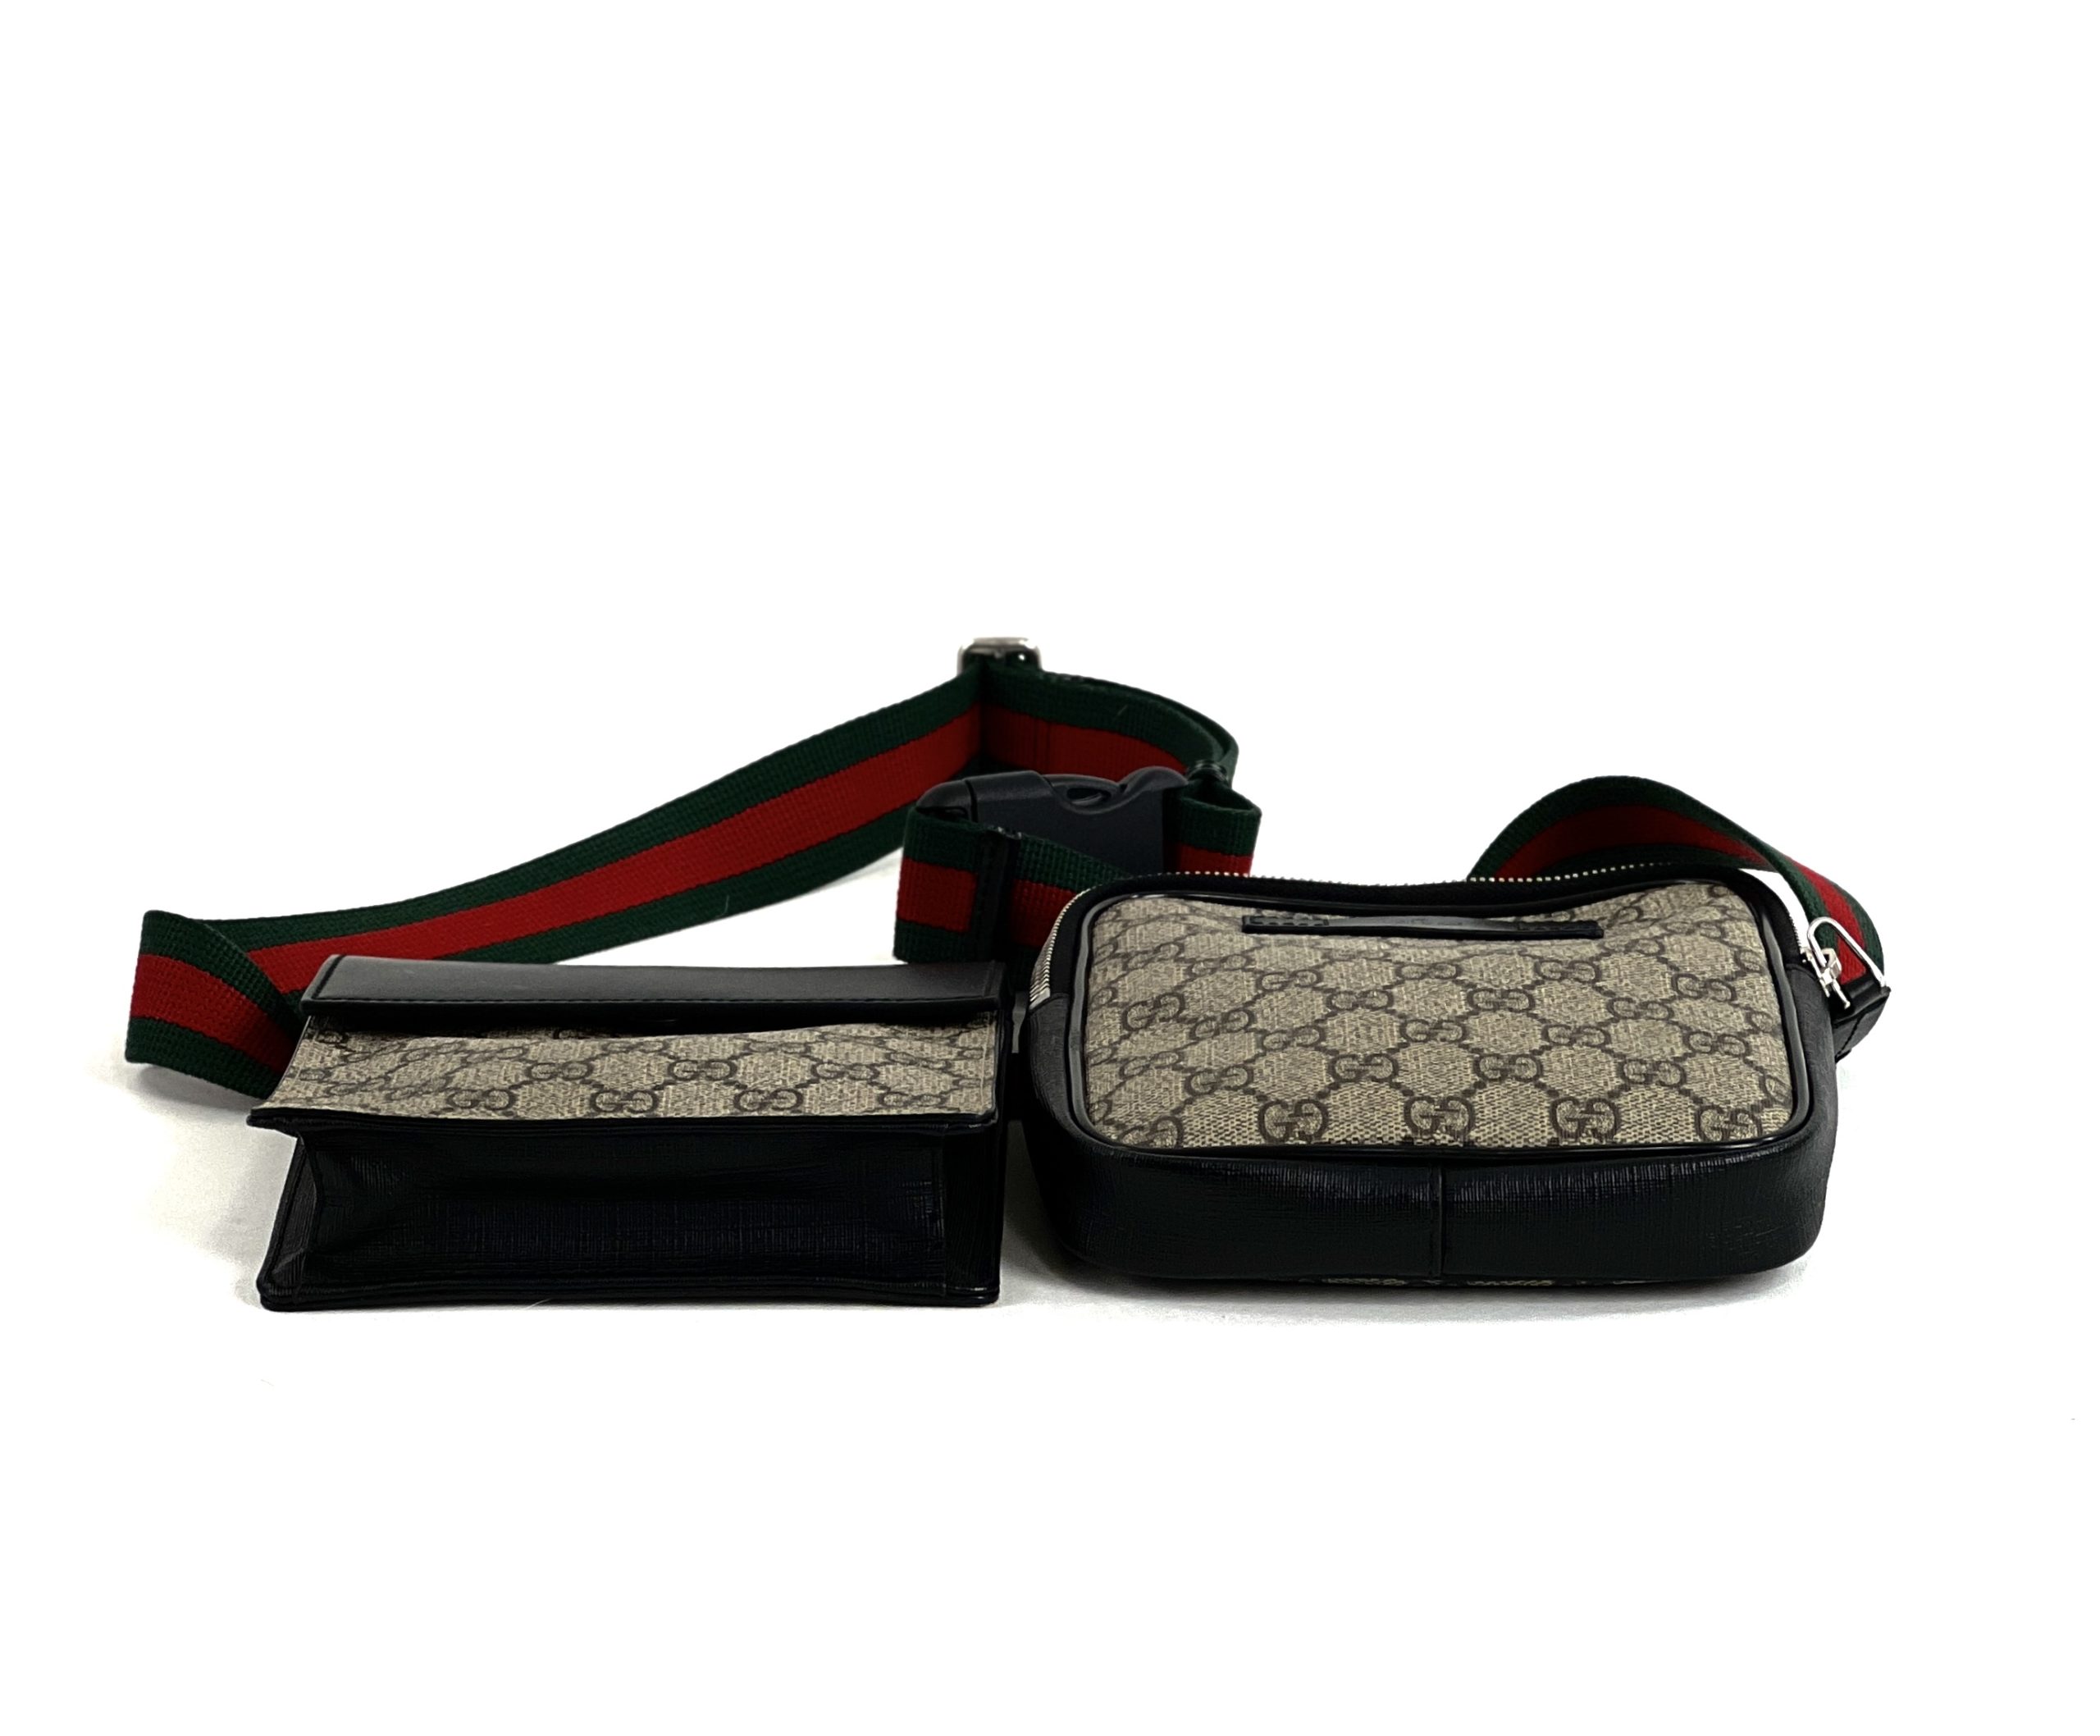 GG Supreme Web Belt Cross Body Bag in Black Gucci